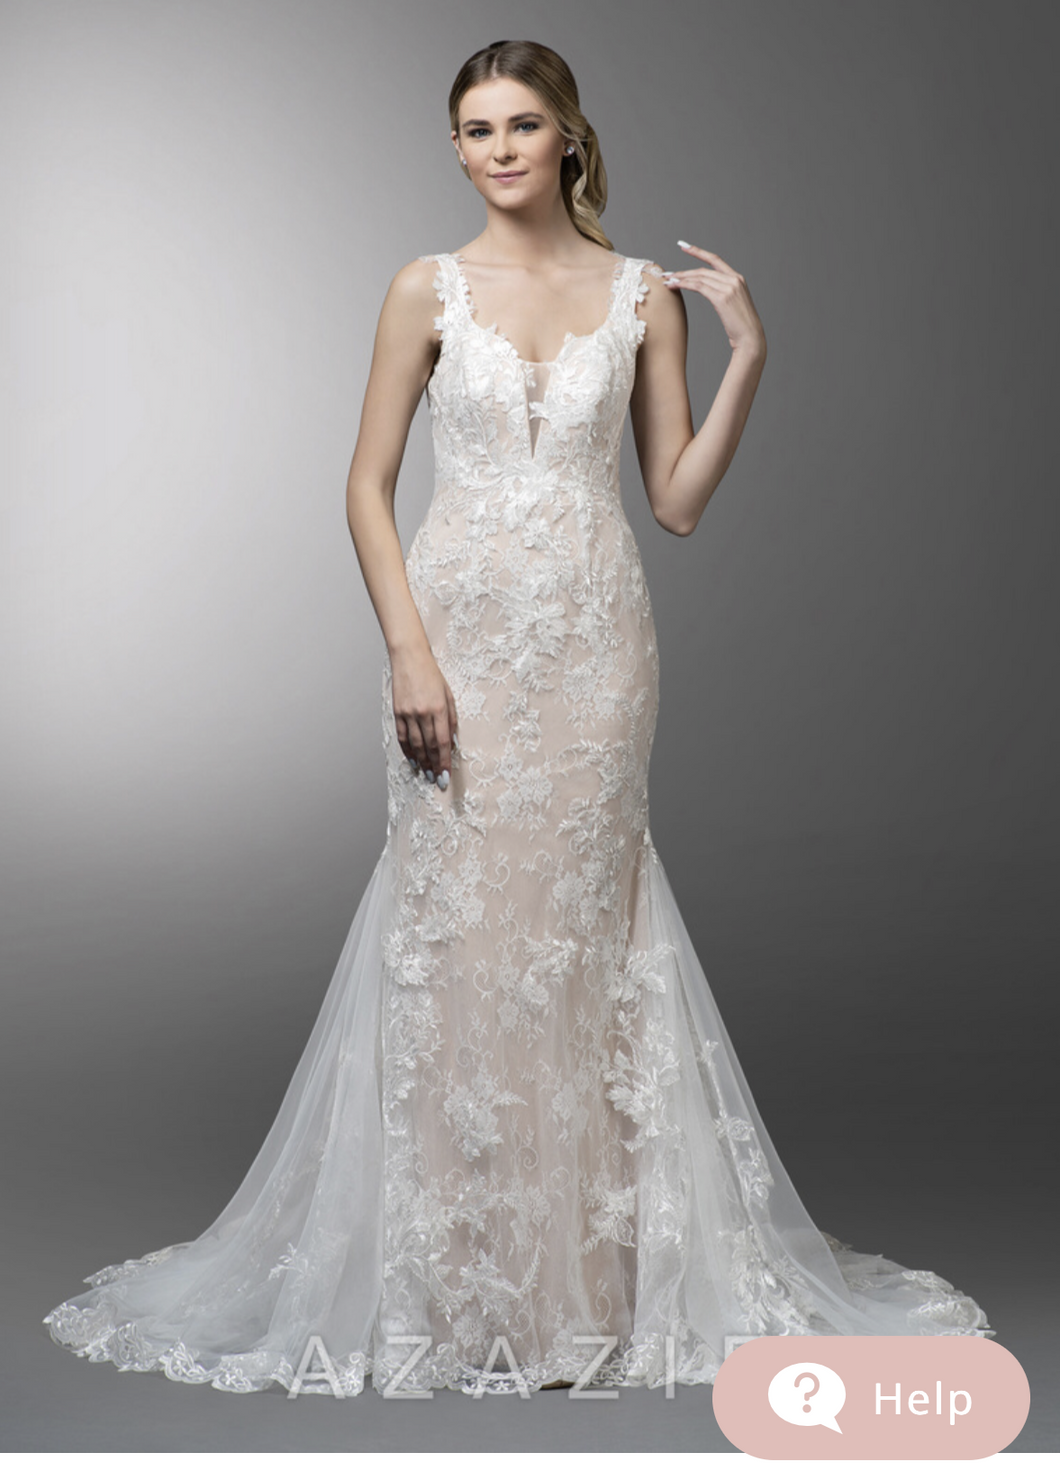 Azazie 'Brielle' size 16 new wedding dress front view on model